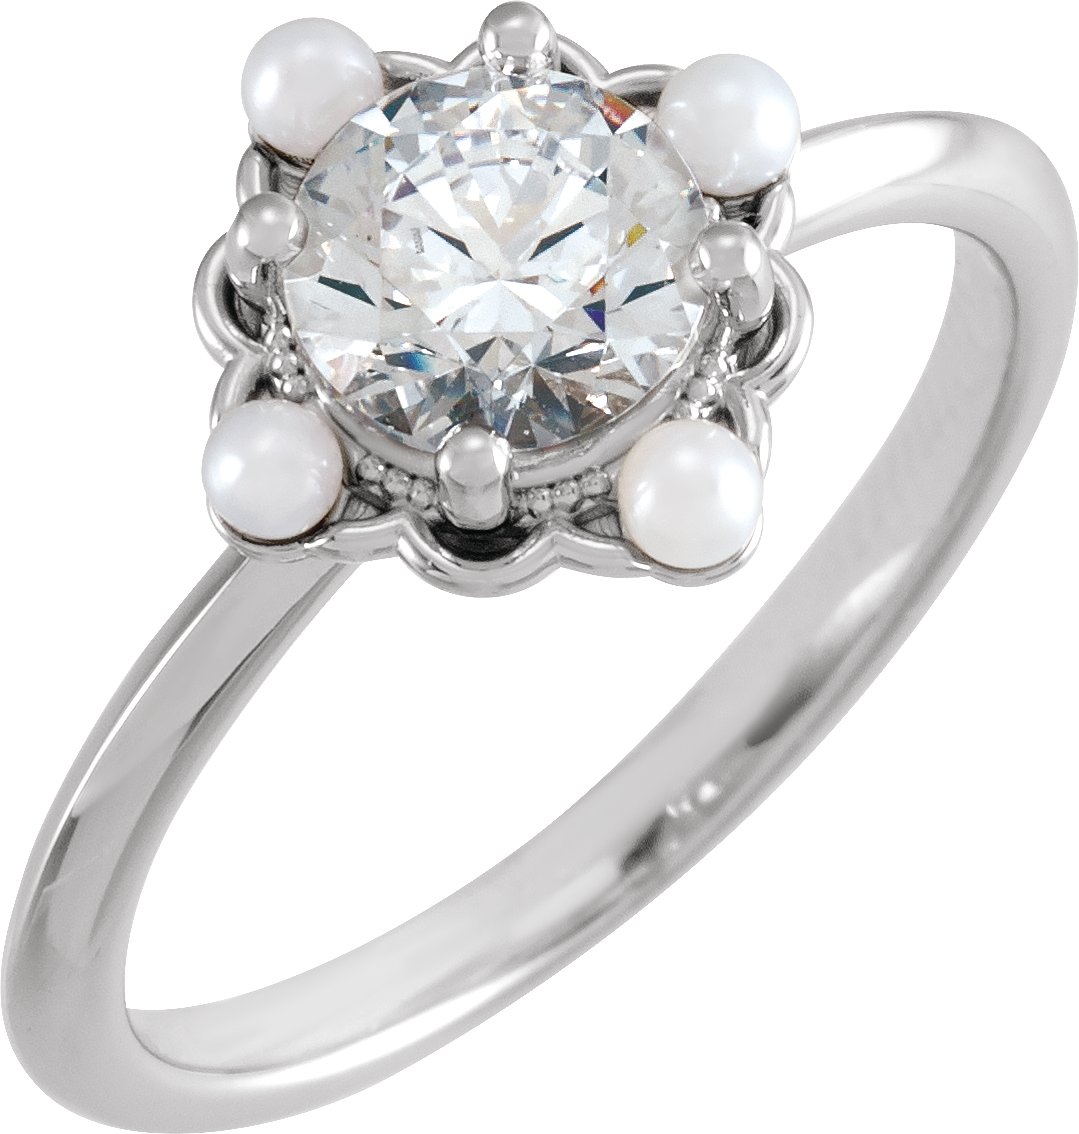 124274 / Engagement Ring / Neosadený / 14K Yellow / round / 5.2 Mm / Polished / Halo-Style Engagement Ring Mounting